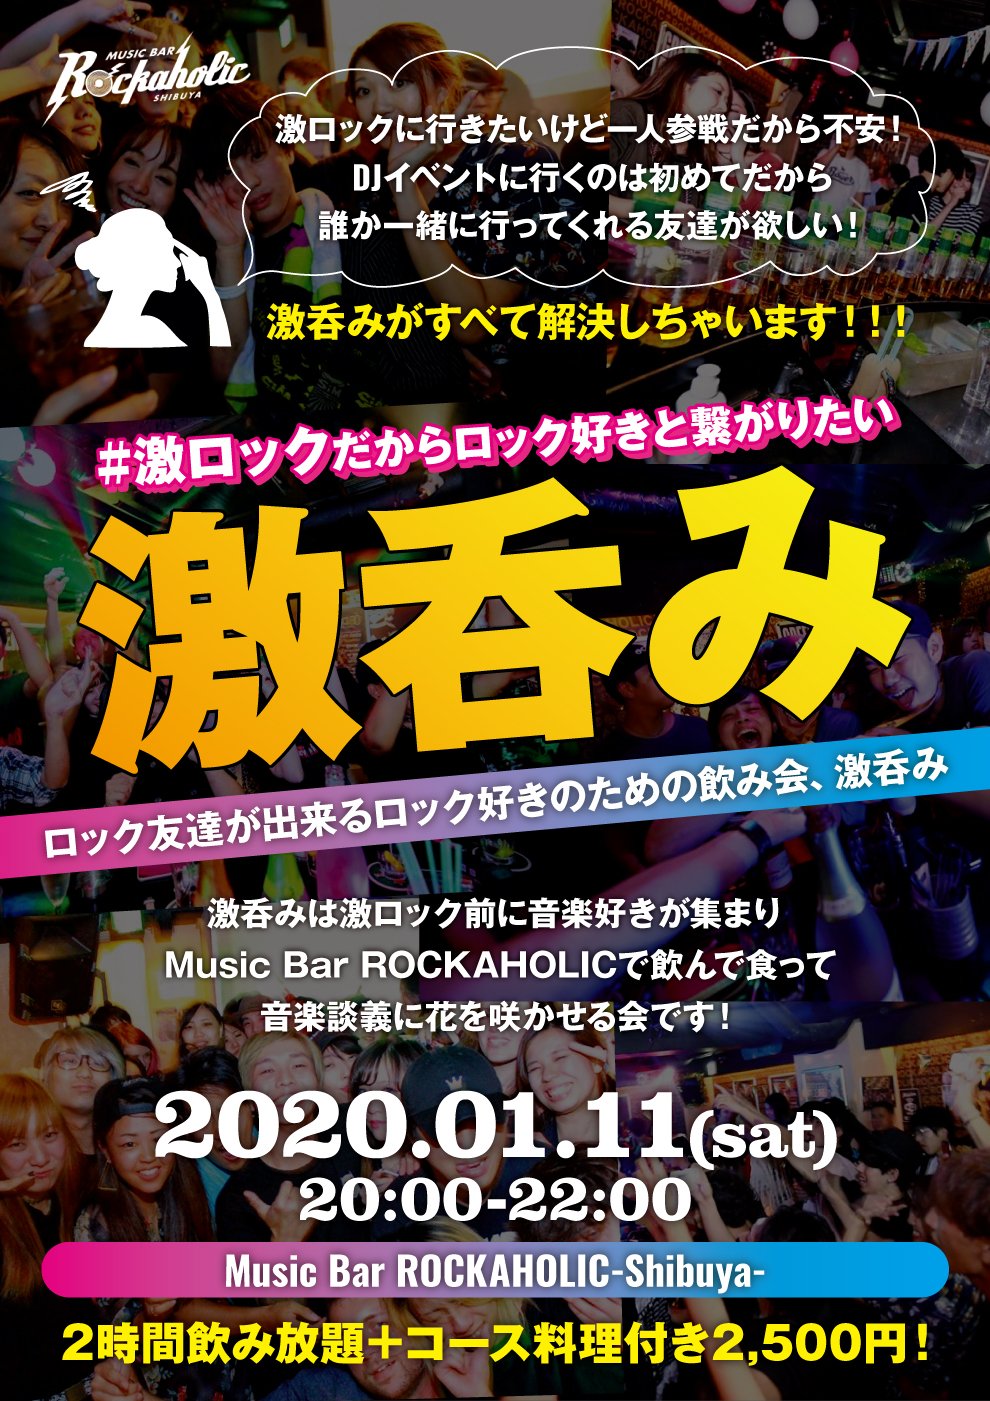 https://bar-rockaholic.jp/shibuya/blog/D6436ACB-FE0C-413F-82B0-96CBB8DE1F4E.jpeg